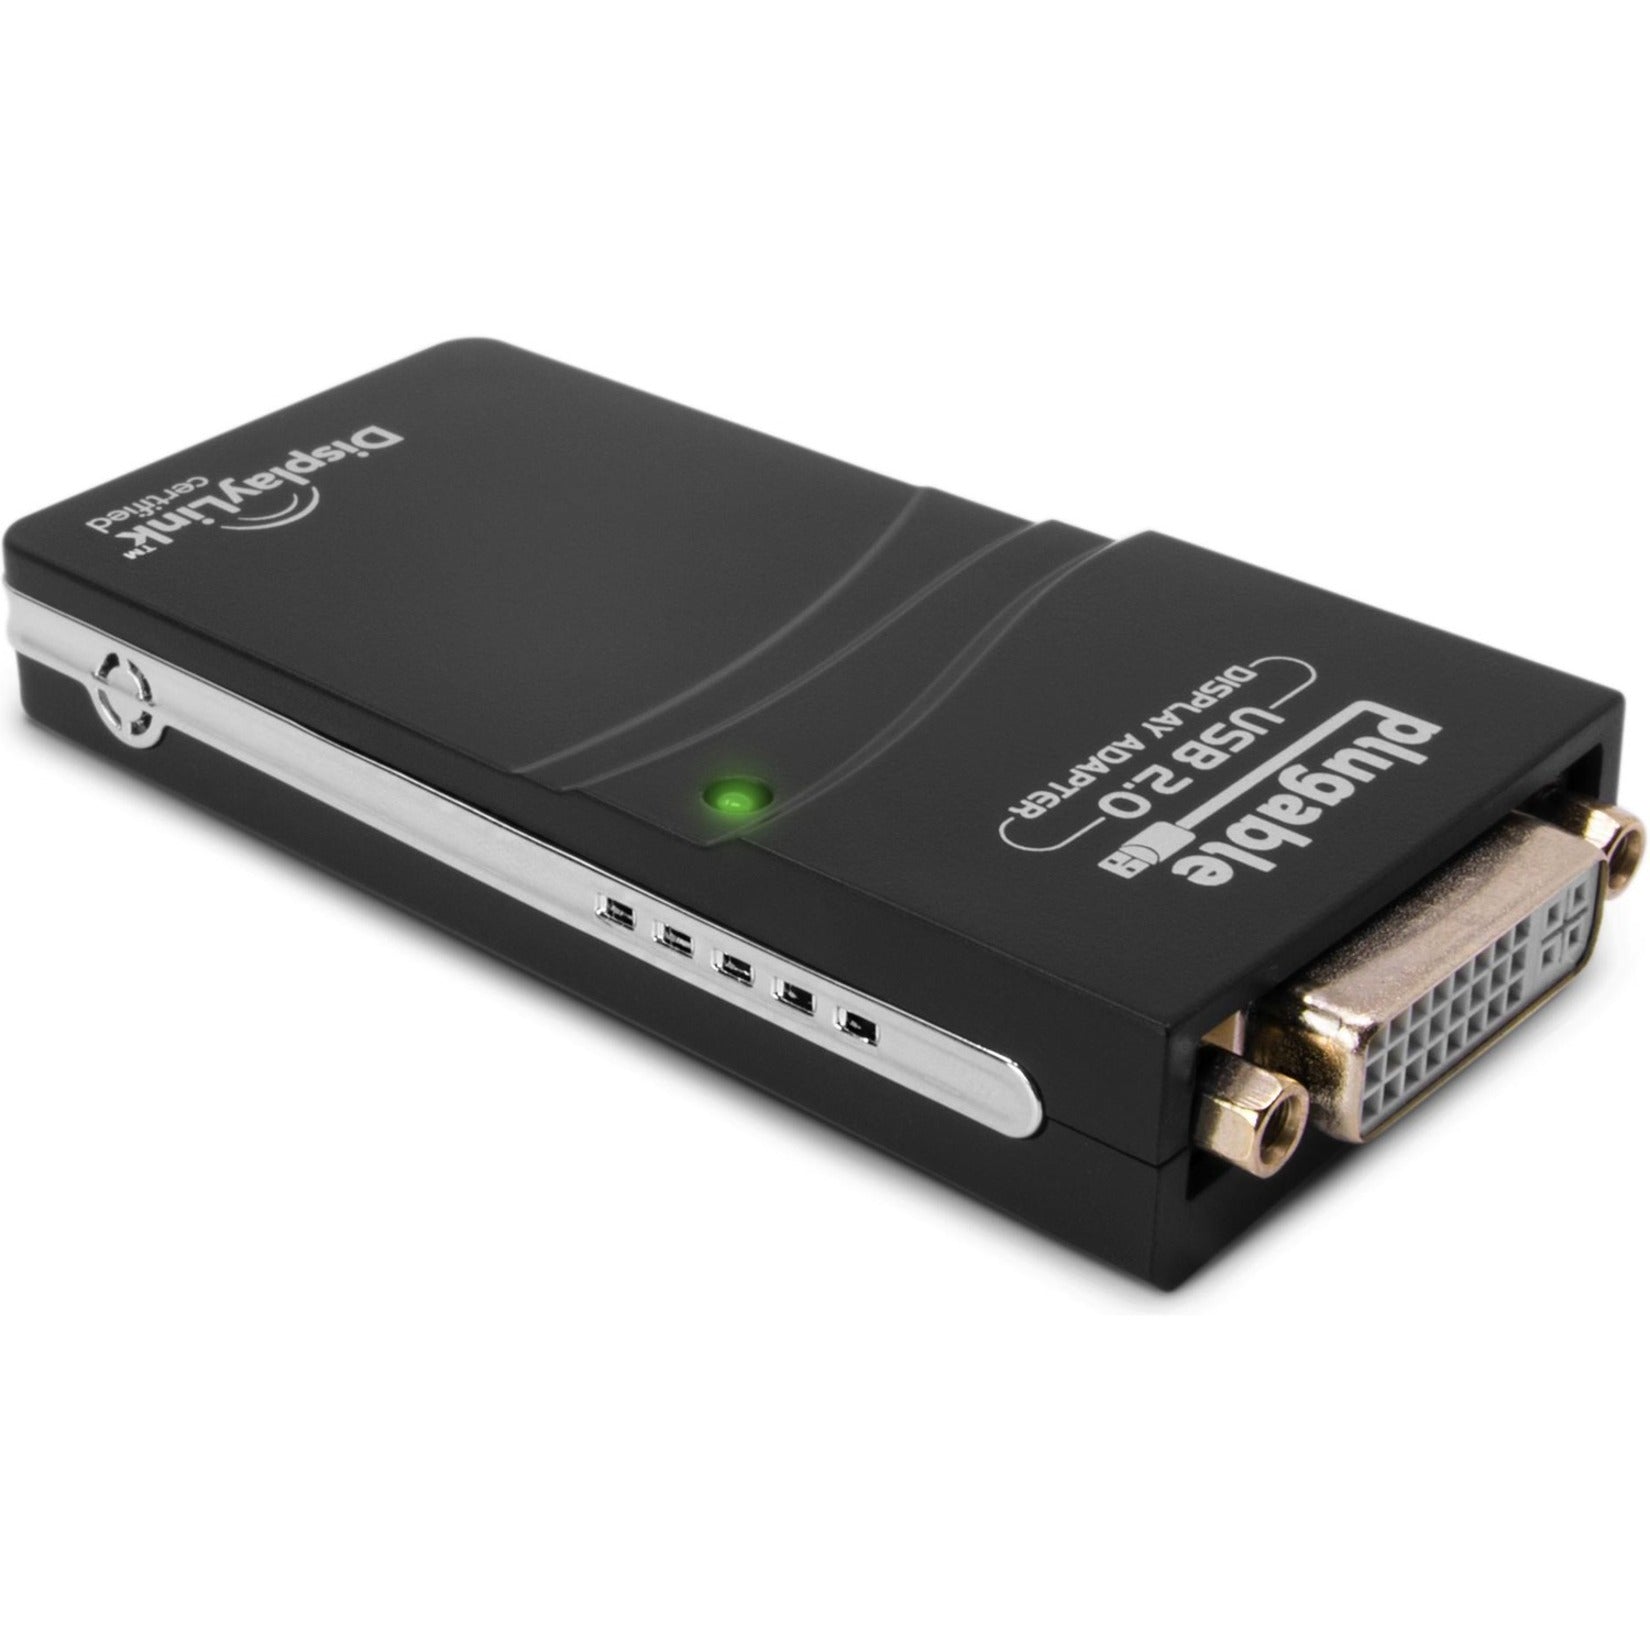 Plugable UGA-165 USB 2.0 zu DVI/VGA/HDMI Video-Grafikadapter für mehrere Monitore Plug-and-Play